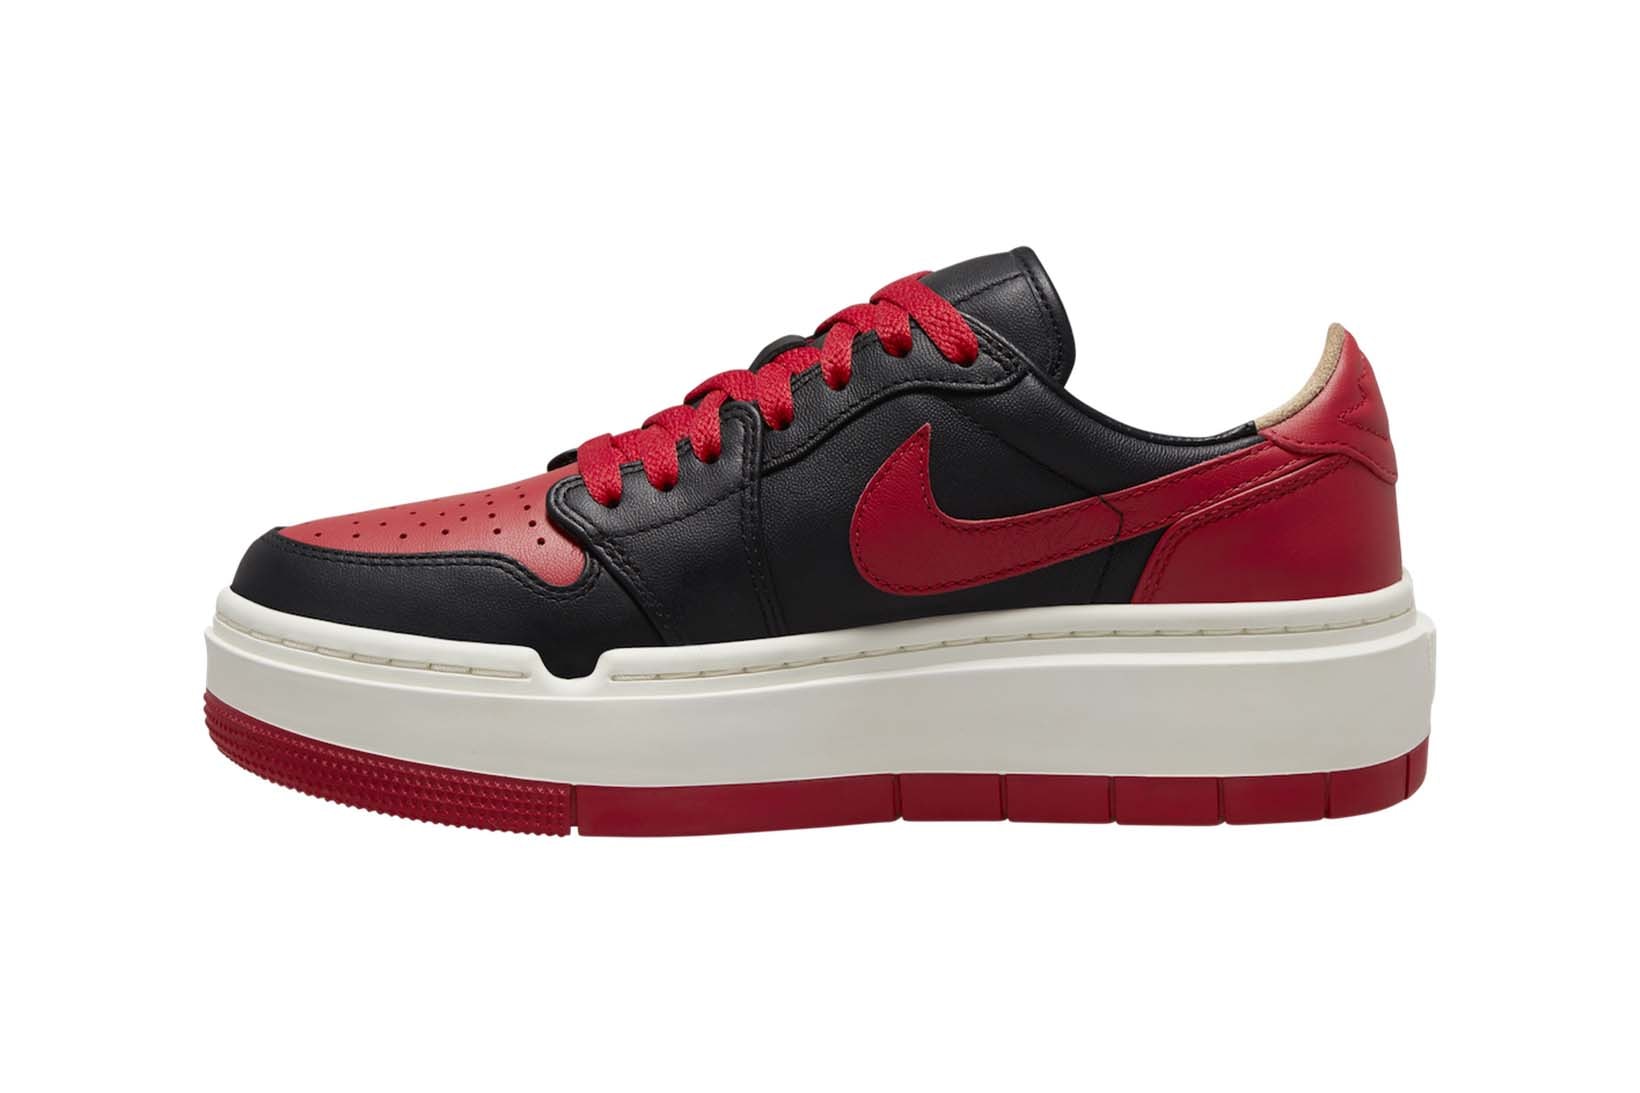 Nike Air Jordan 1 Low LV8D Elevated Platform Sneaker Bred Price Release Date Official Images Anklet